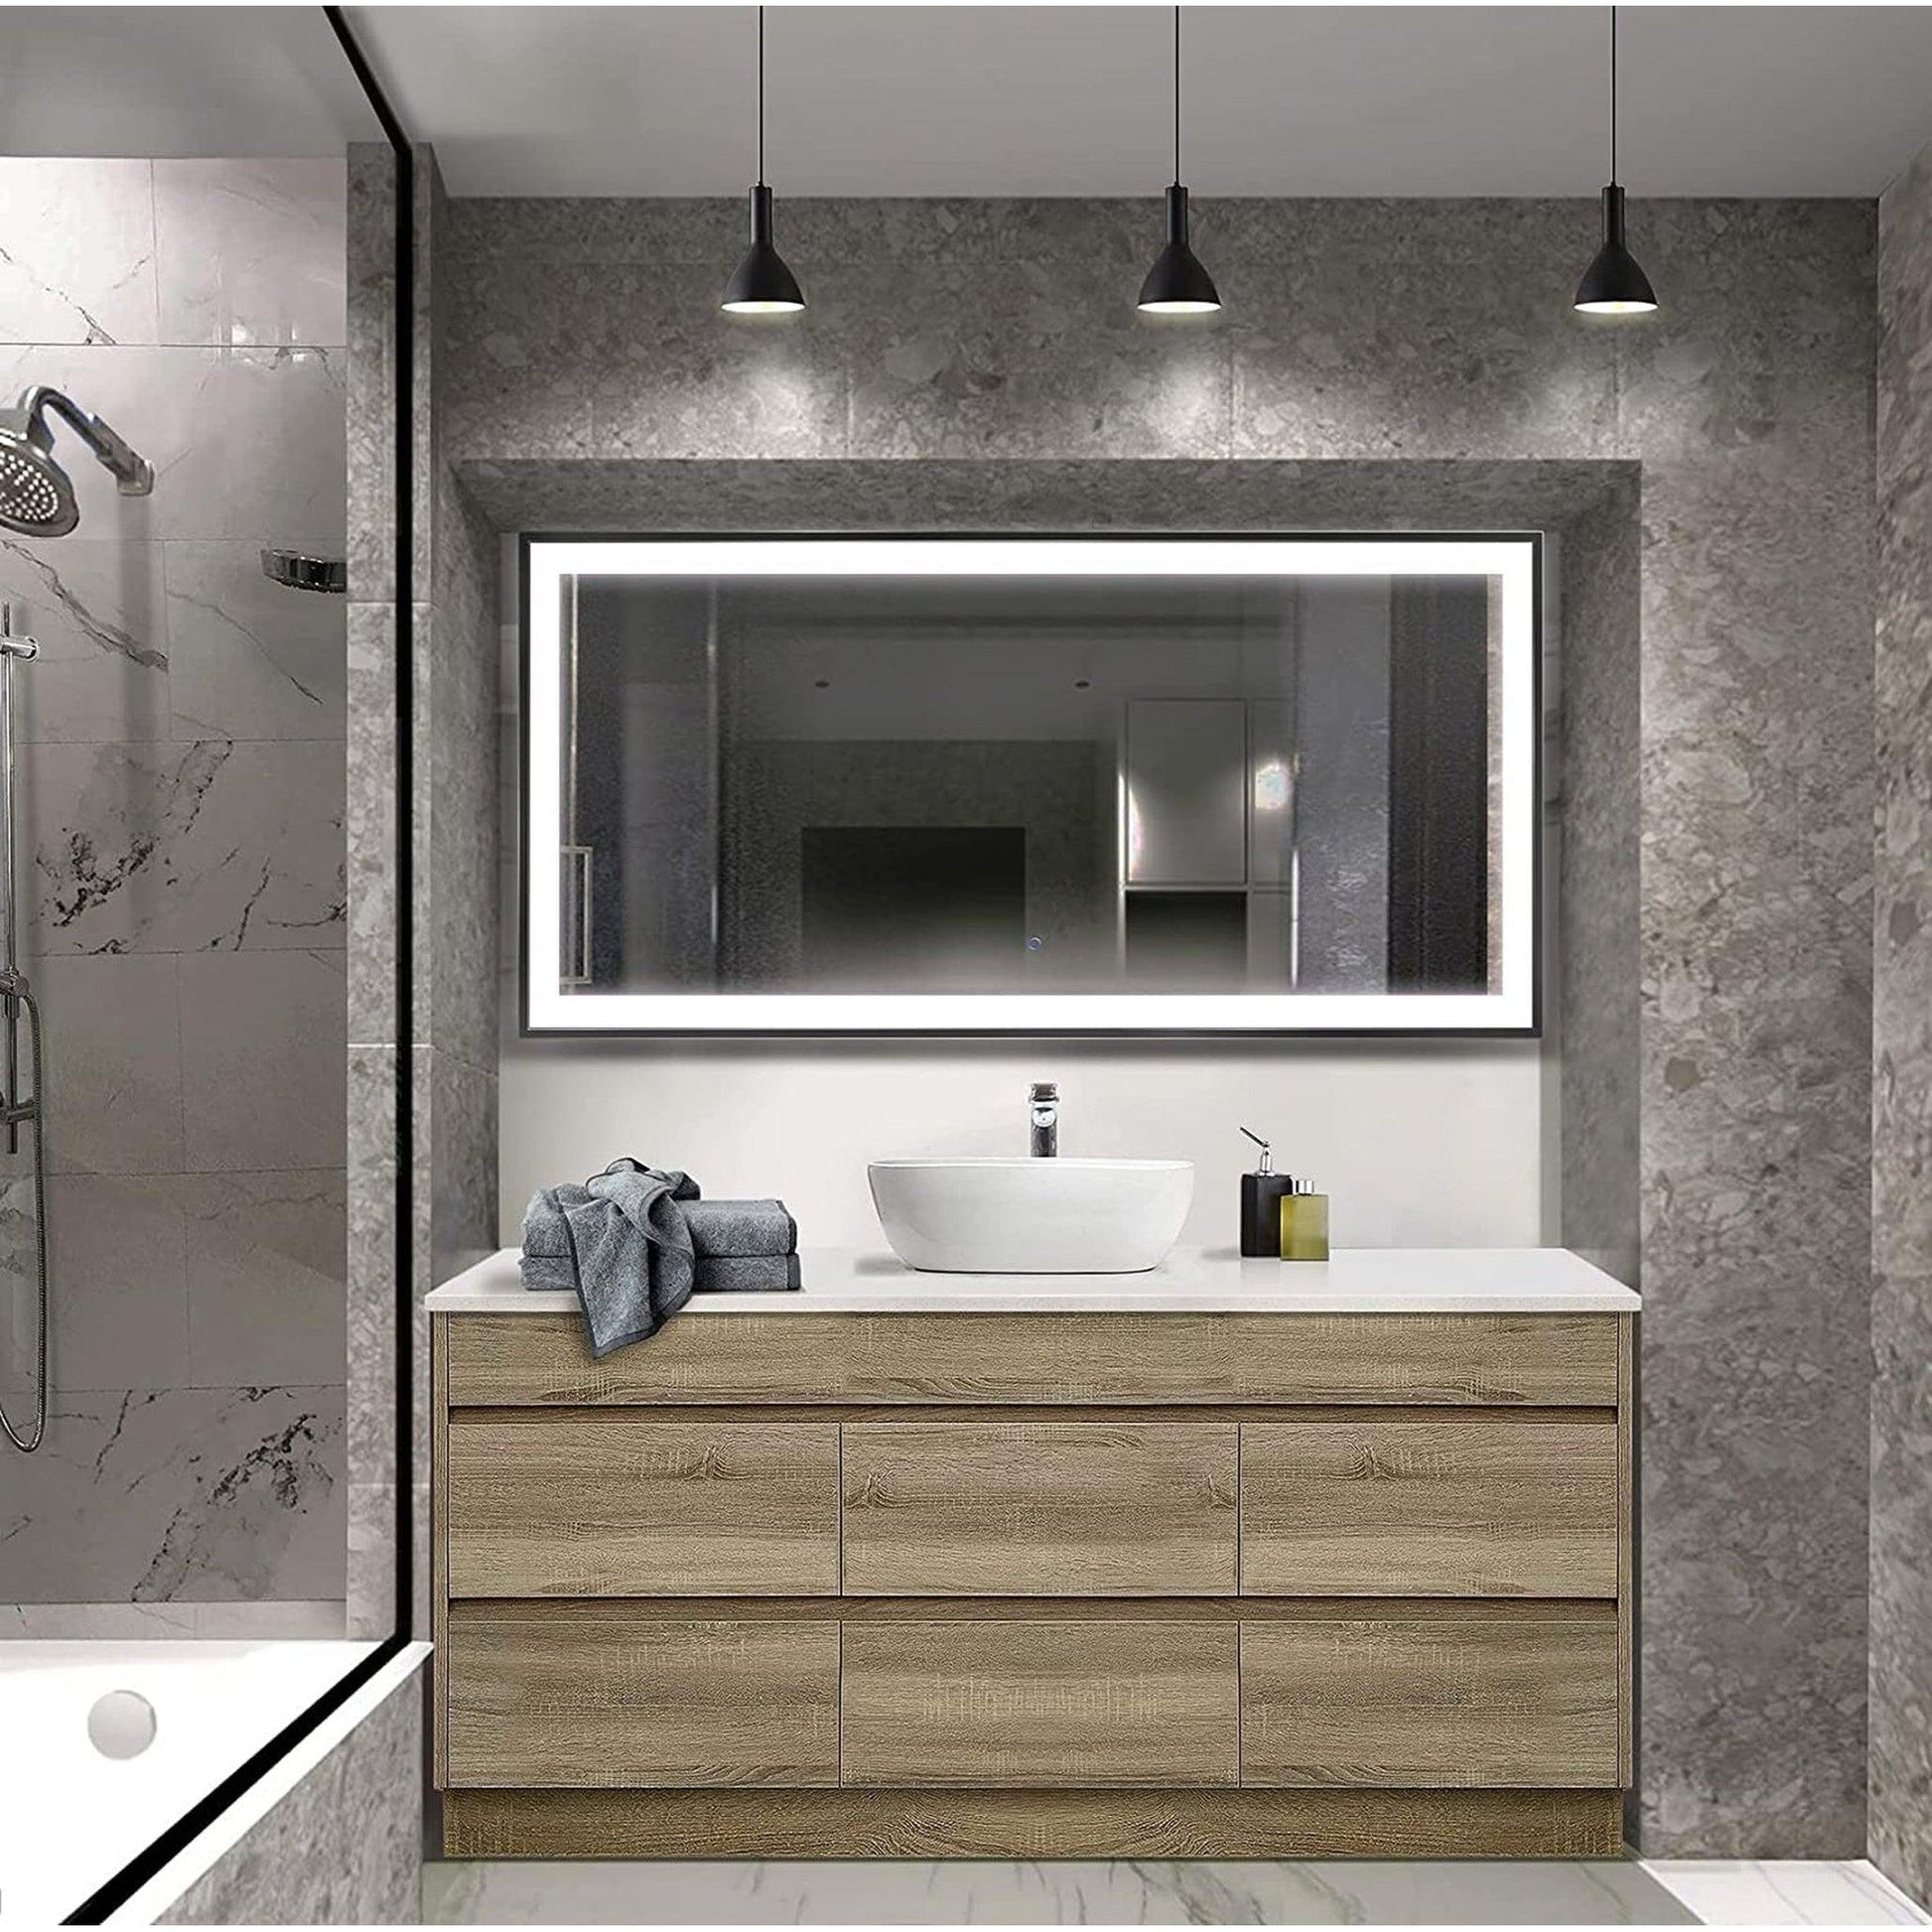 Krugg Reflections Soho 60" x 30" 5000K Rectangular Matte Black Wall-Mounted Framed LED Bathroom Vanity Mirror With Built-in Defogger and Dimmer